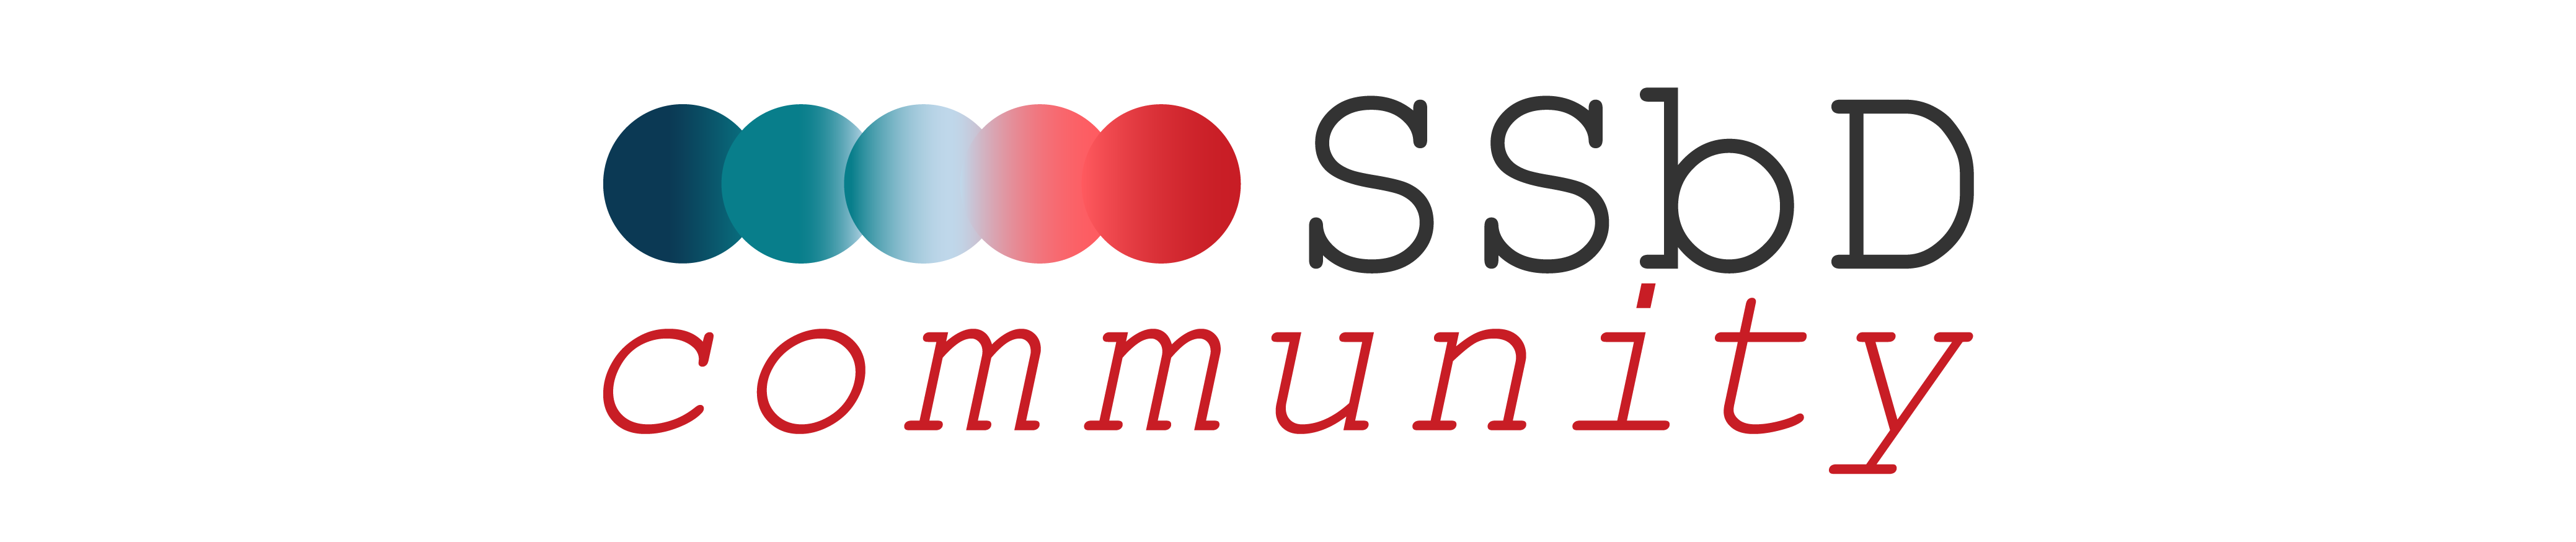 SSbD community logo space